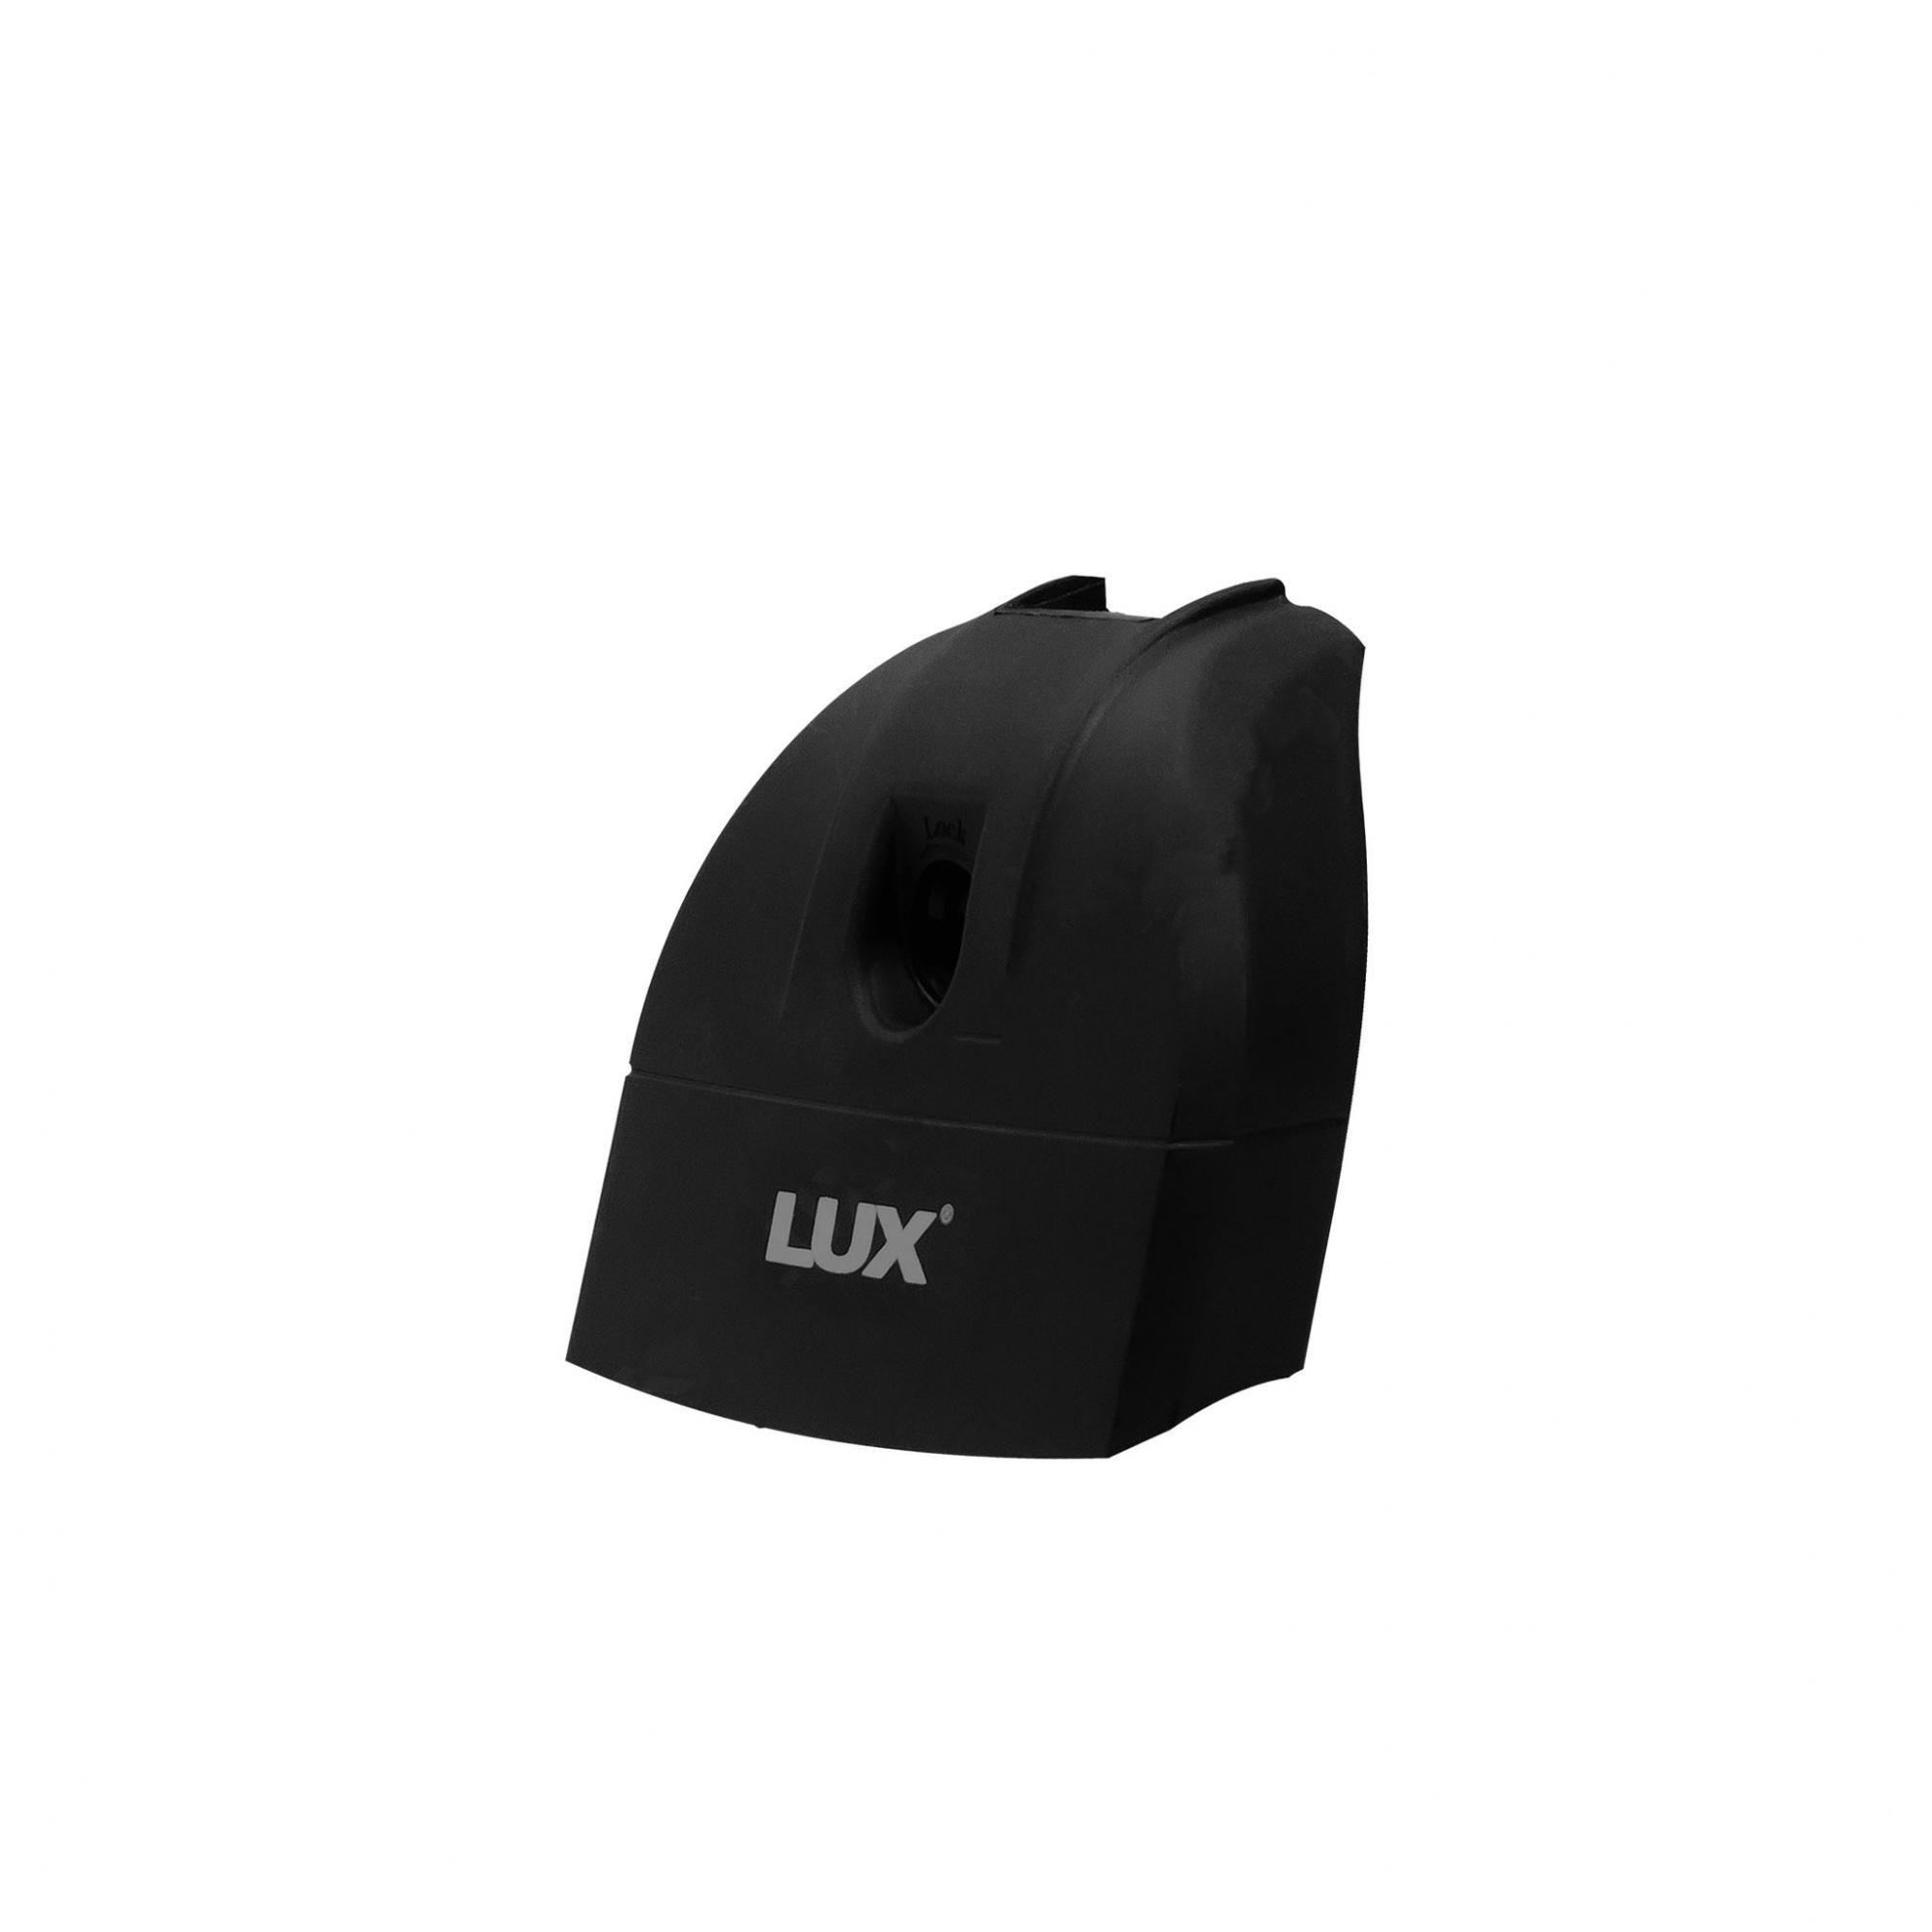 Крышка опоры БК2 LUX без личинки (1 шт.), арт:LUX-792498